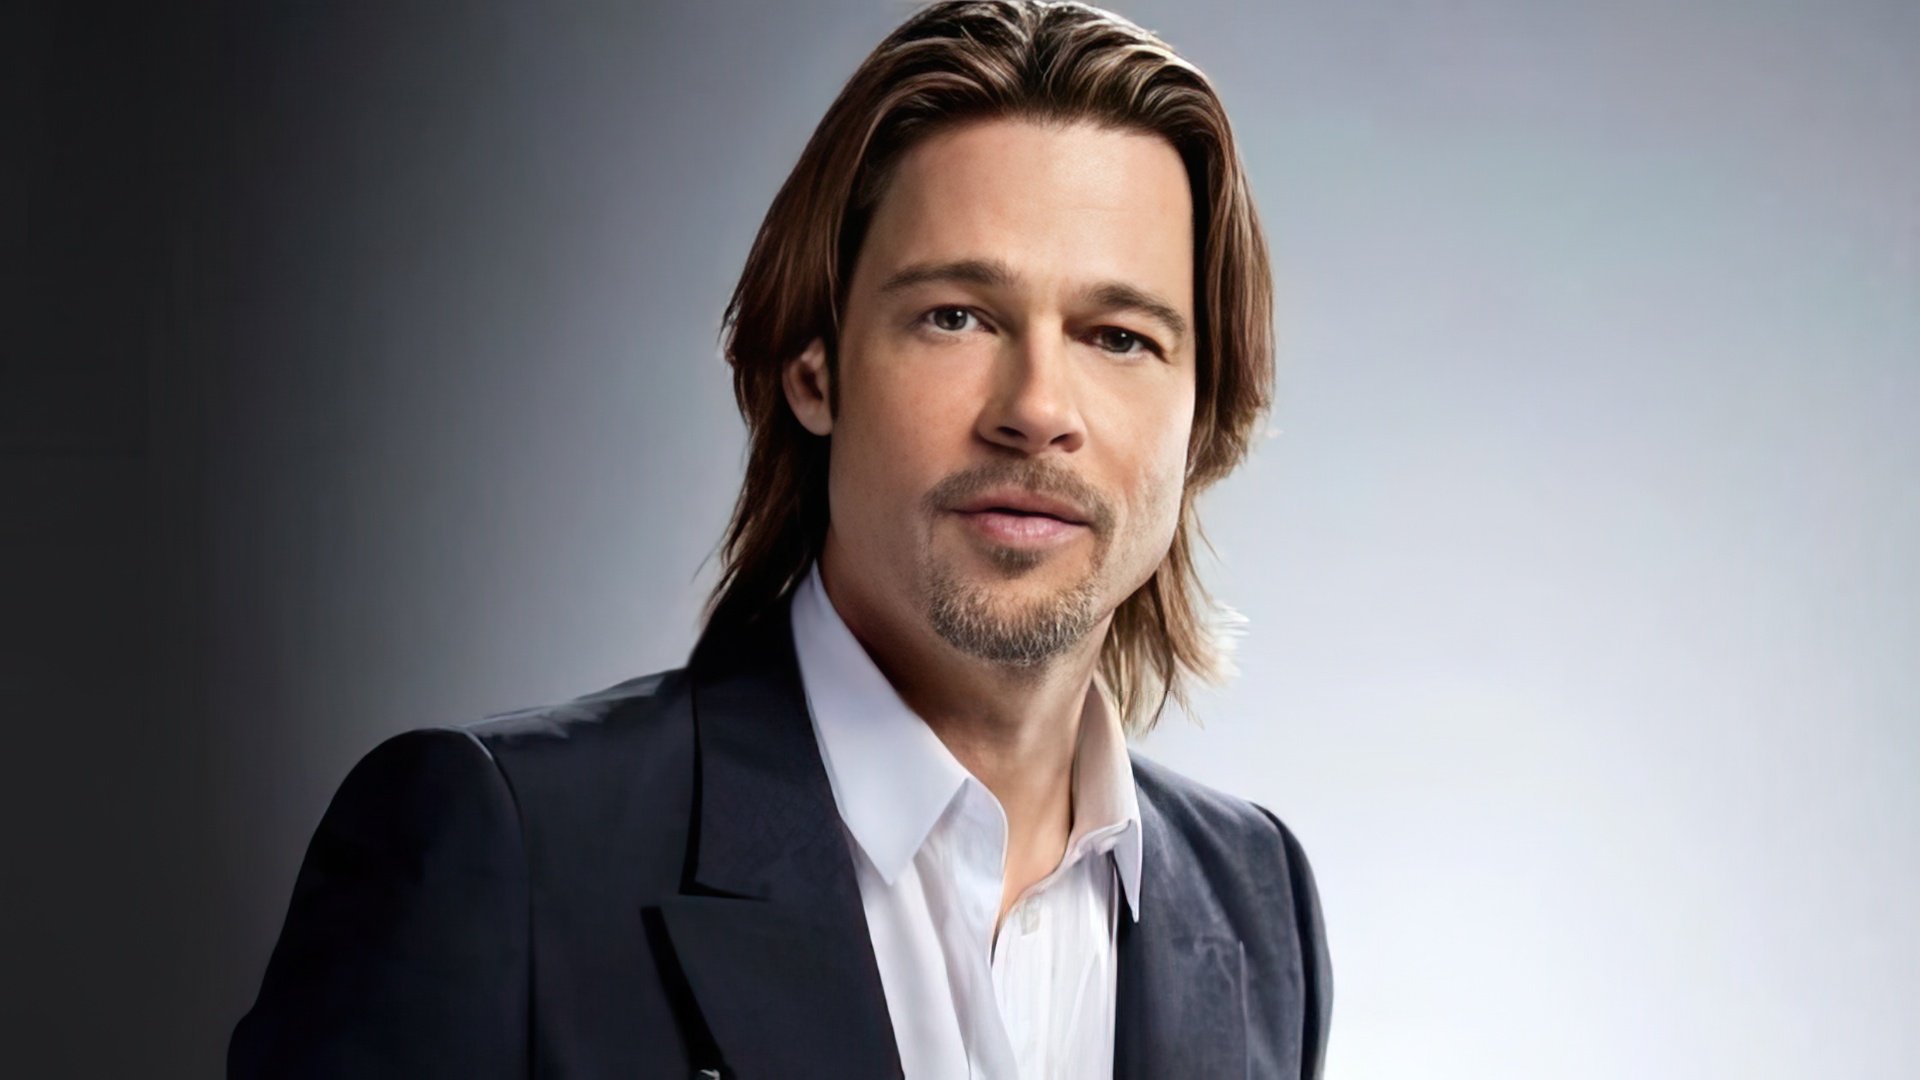 The sexiest on Earth, Brad Pitt